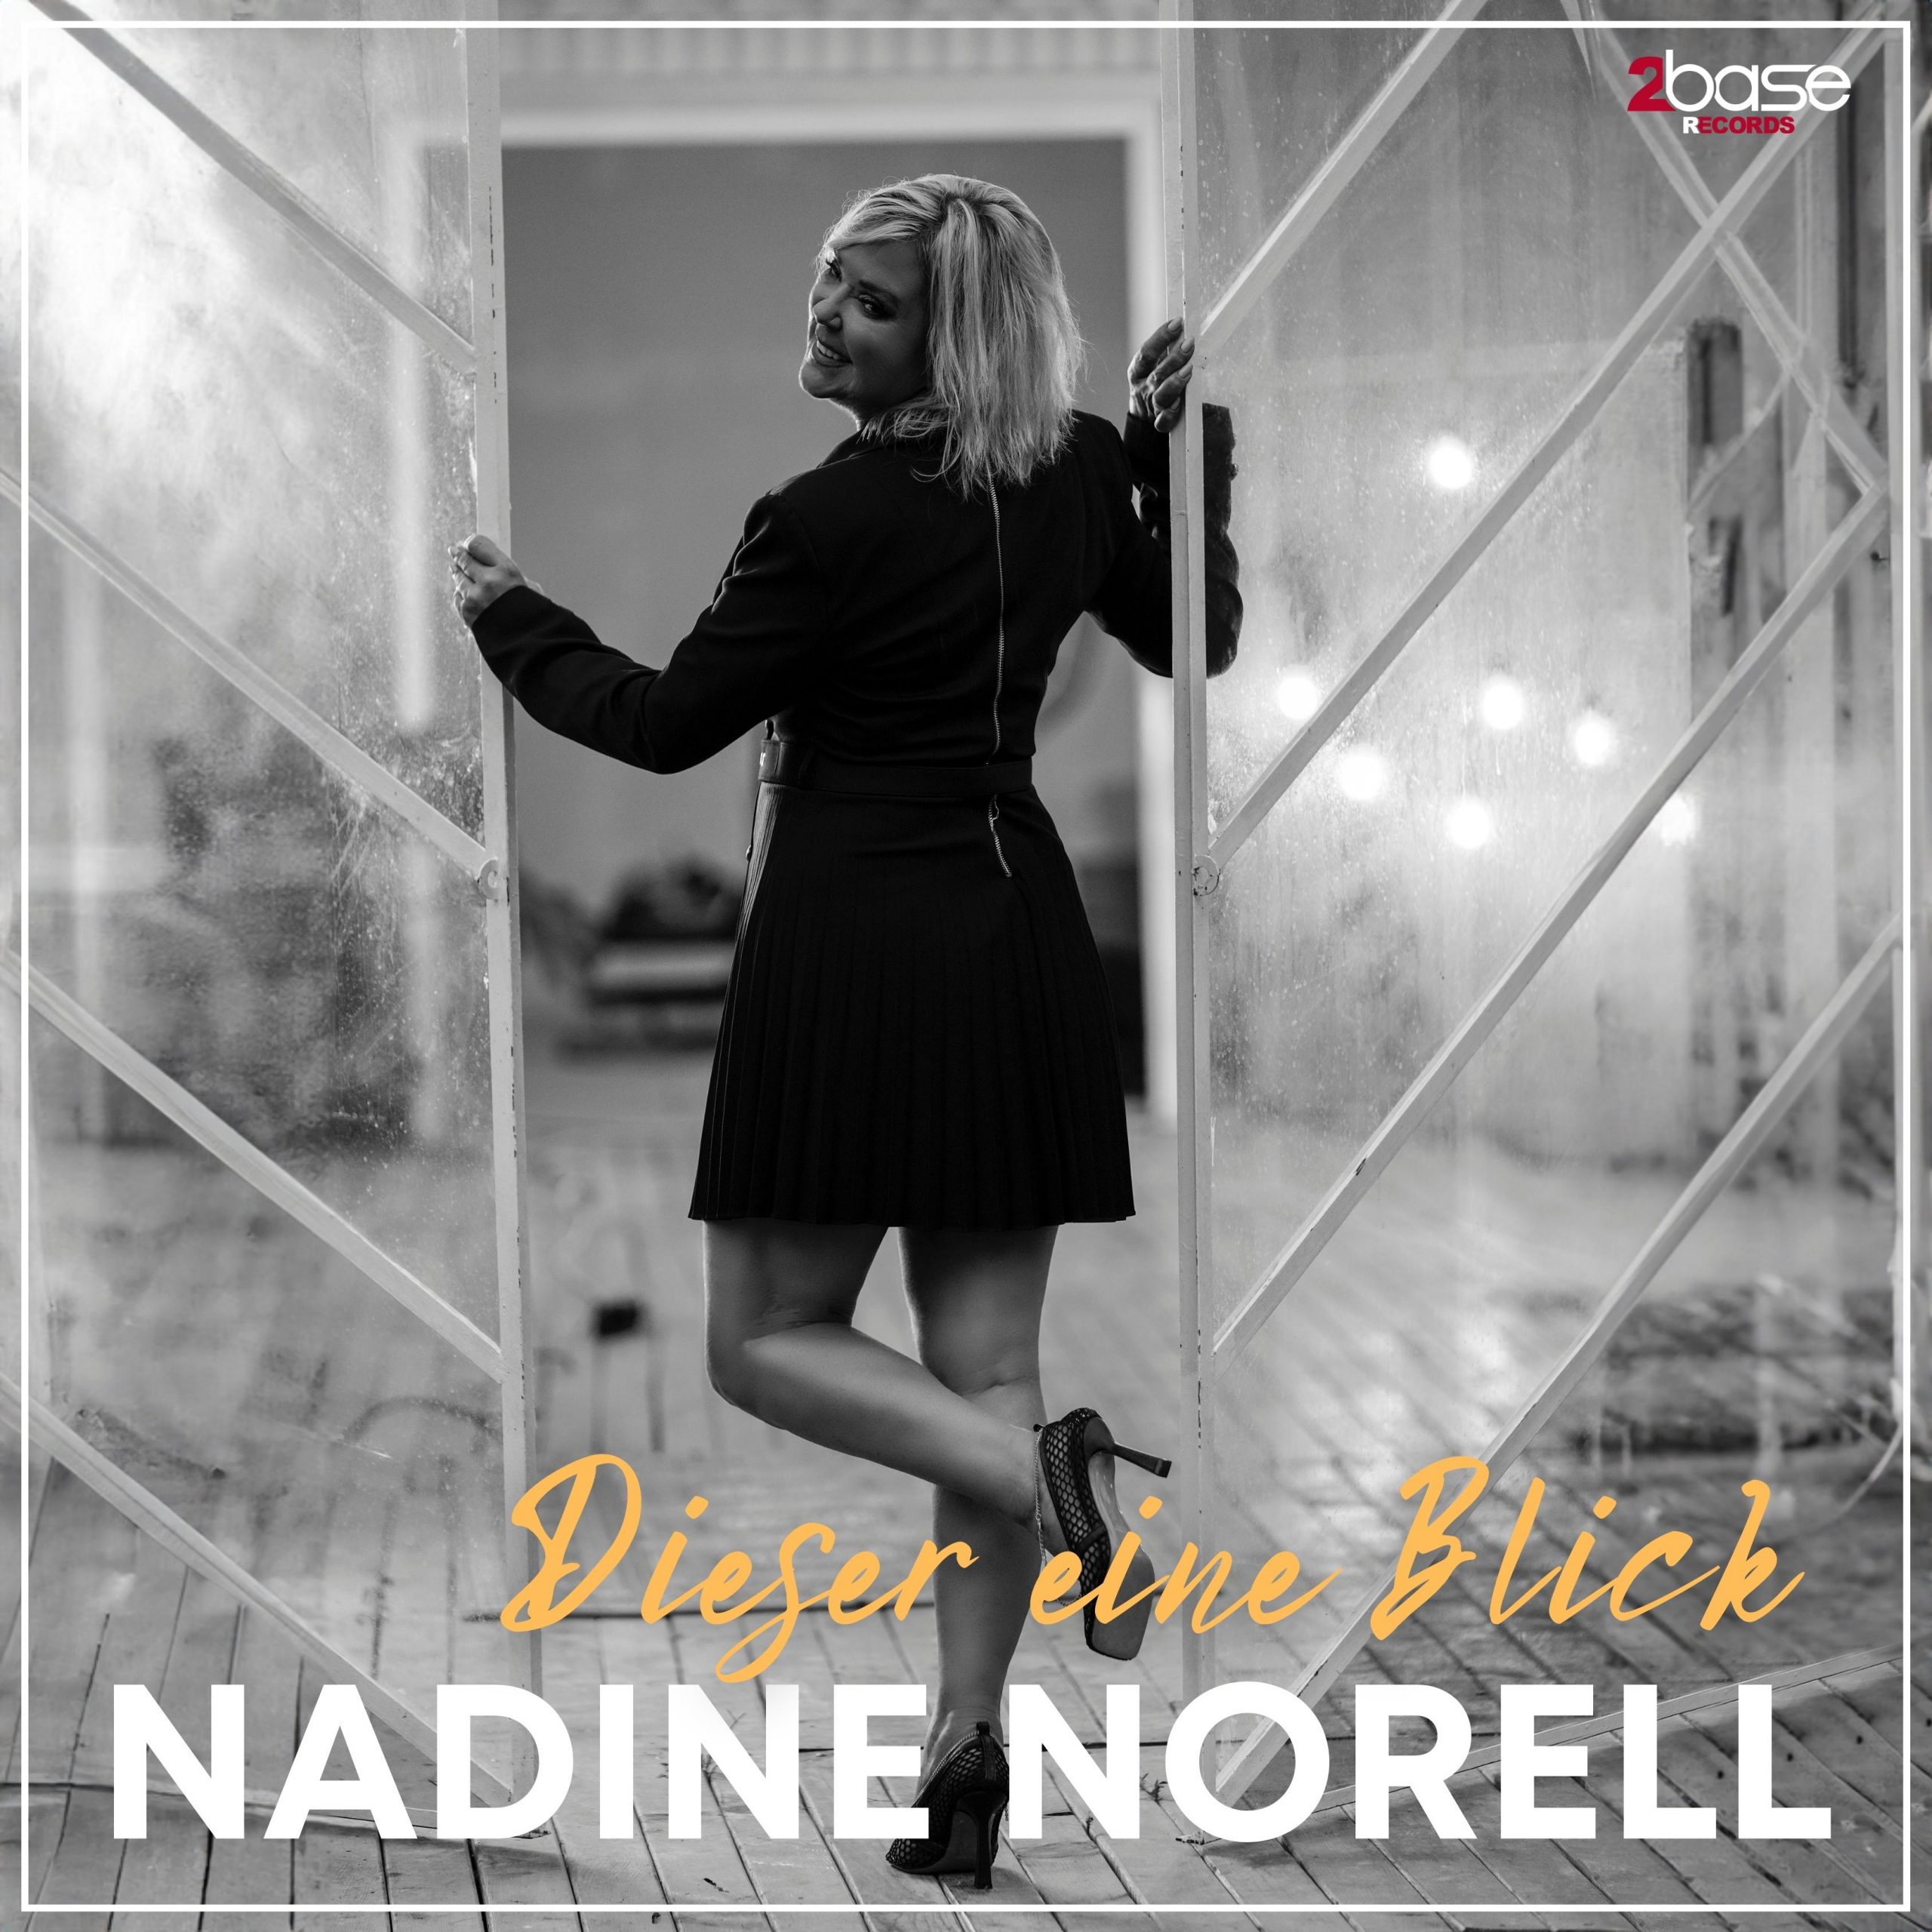 Nadine Norell Dieser eine Blick CD Cover